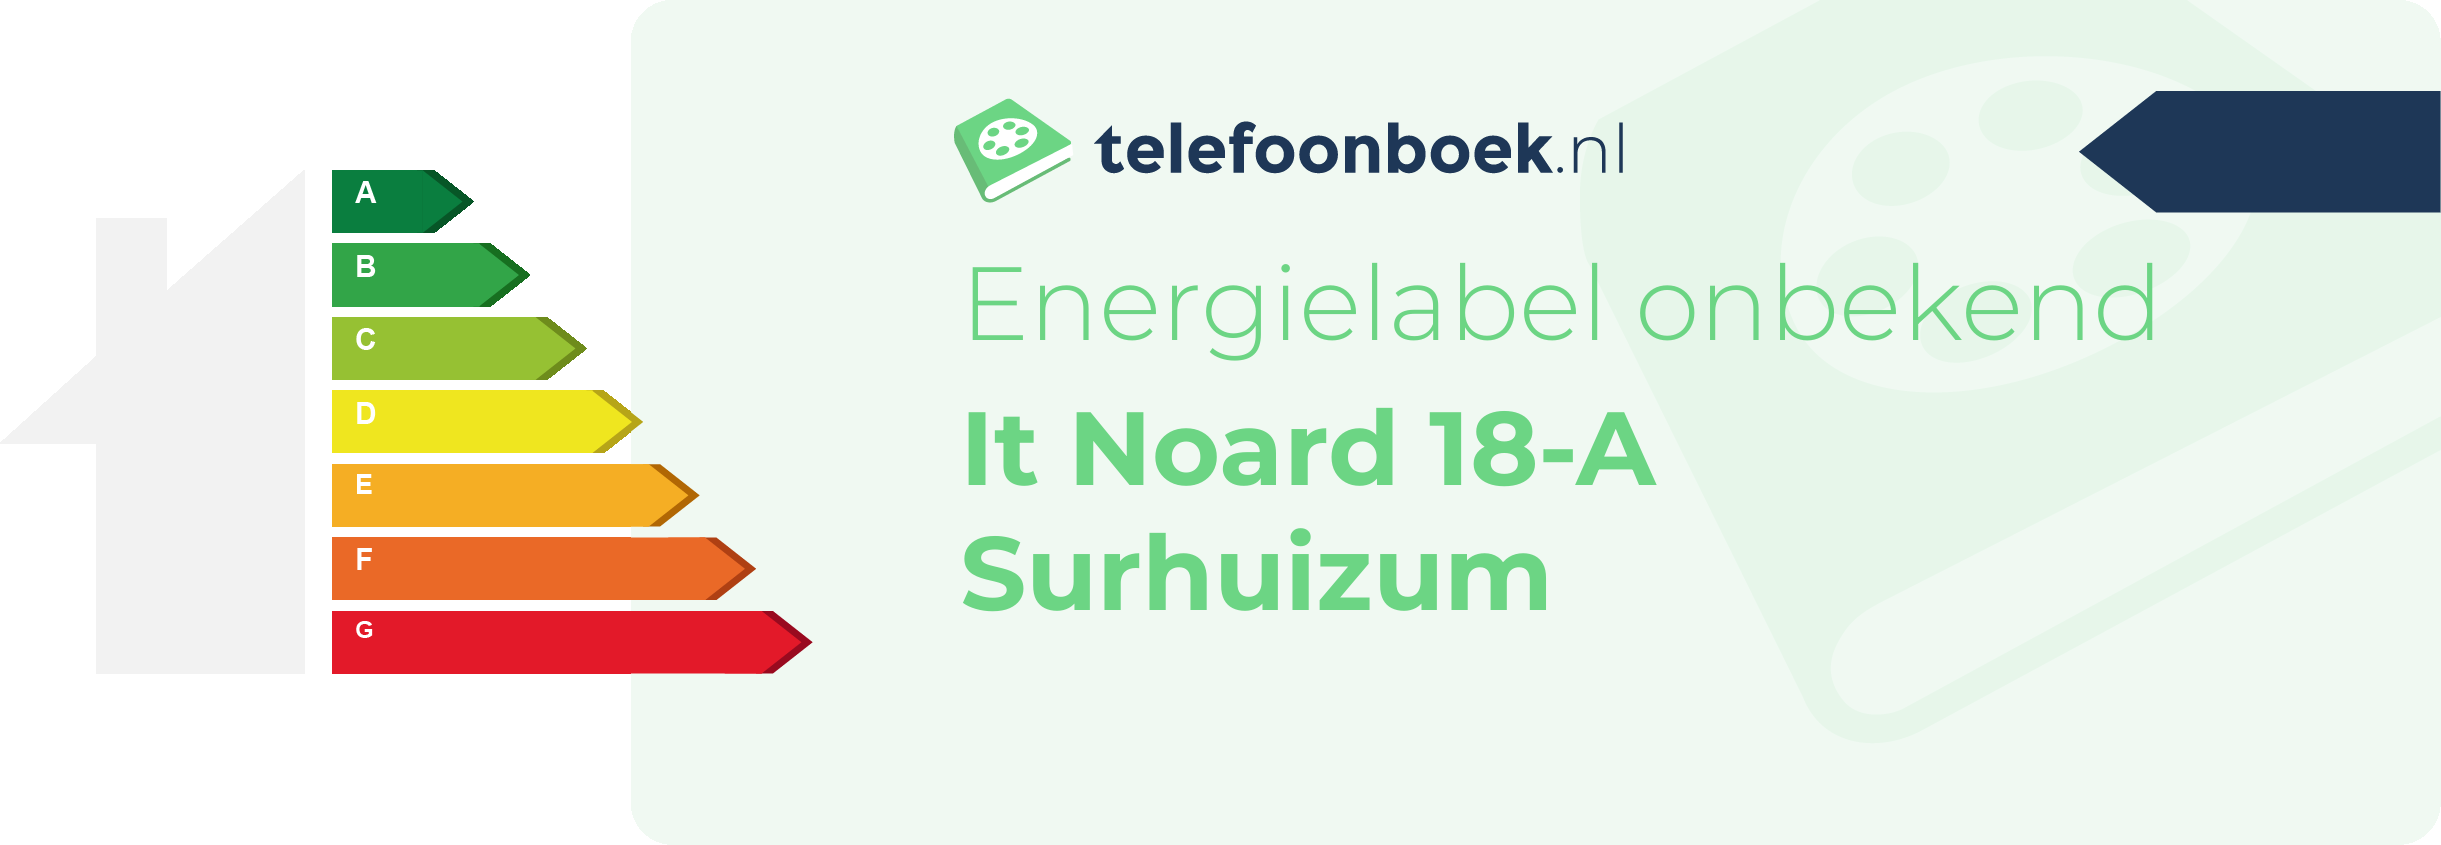 Energielabel It Noard 18-A Surhuizum